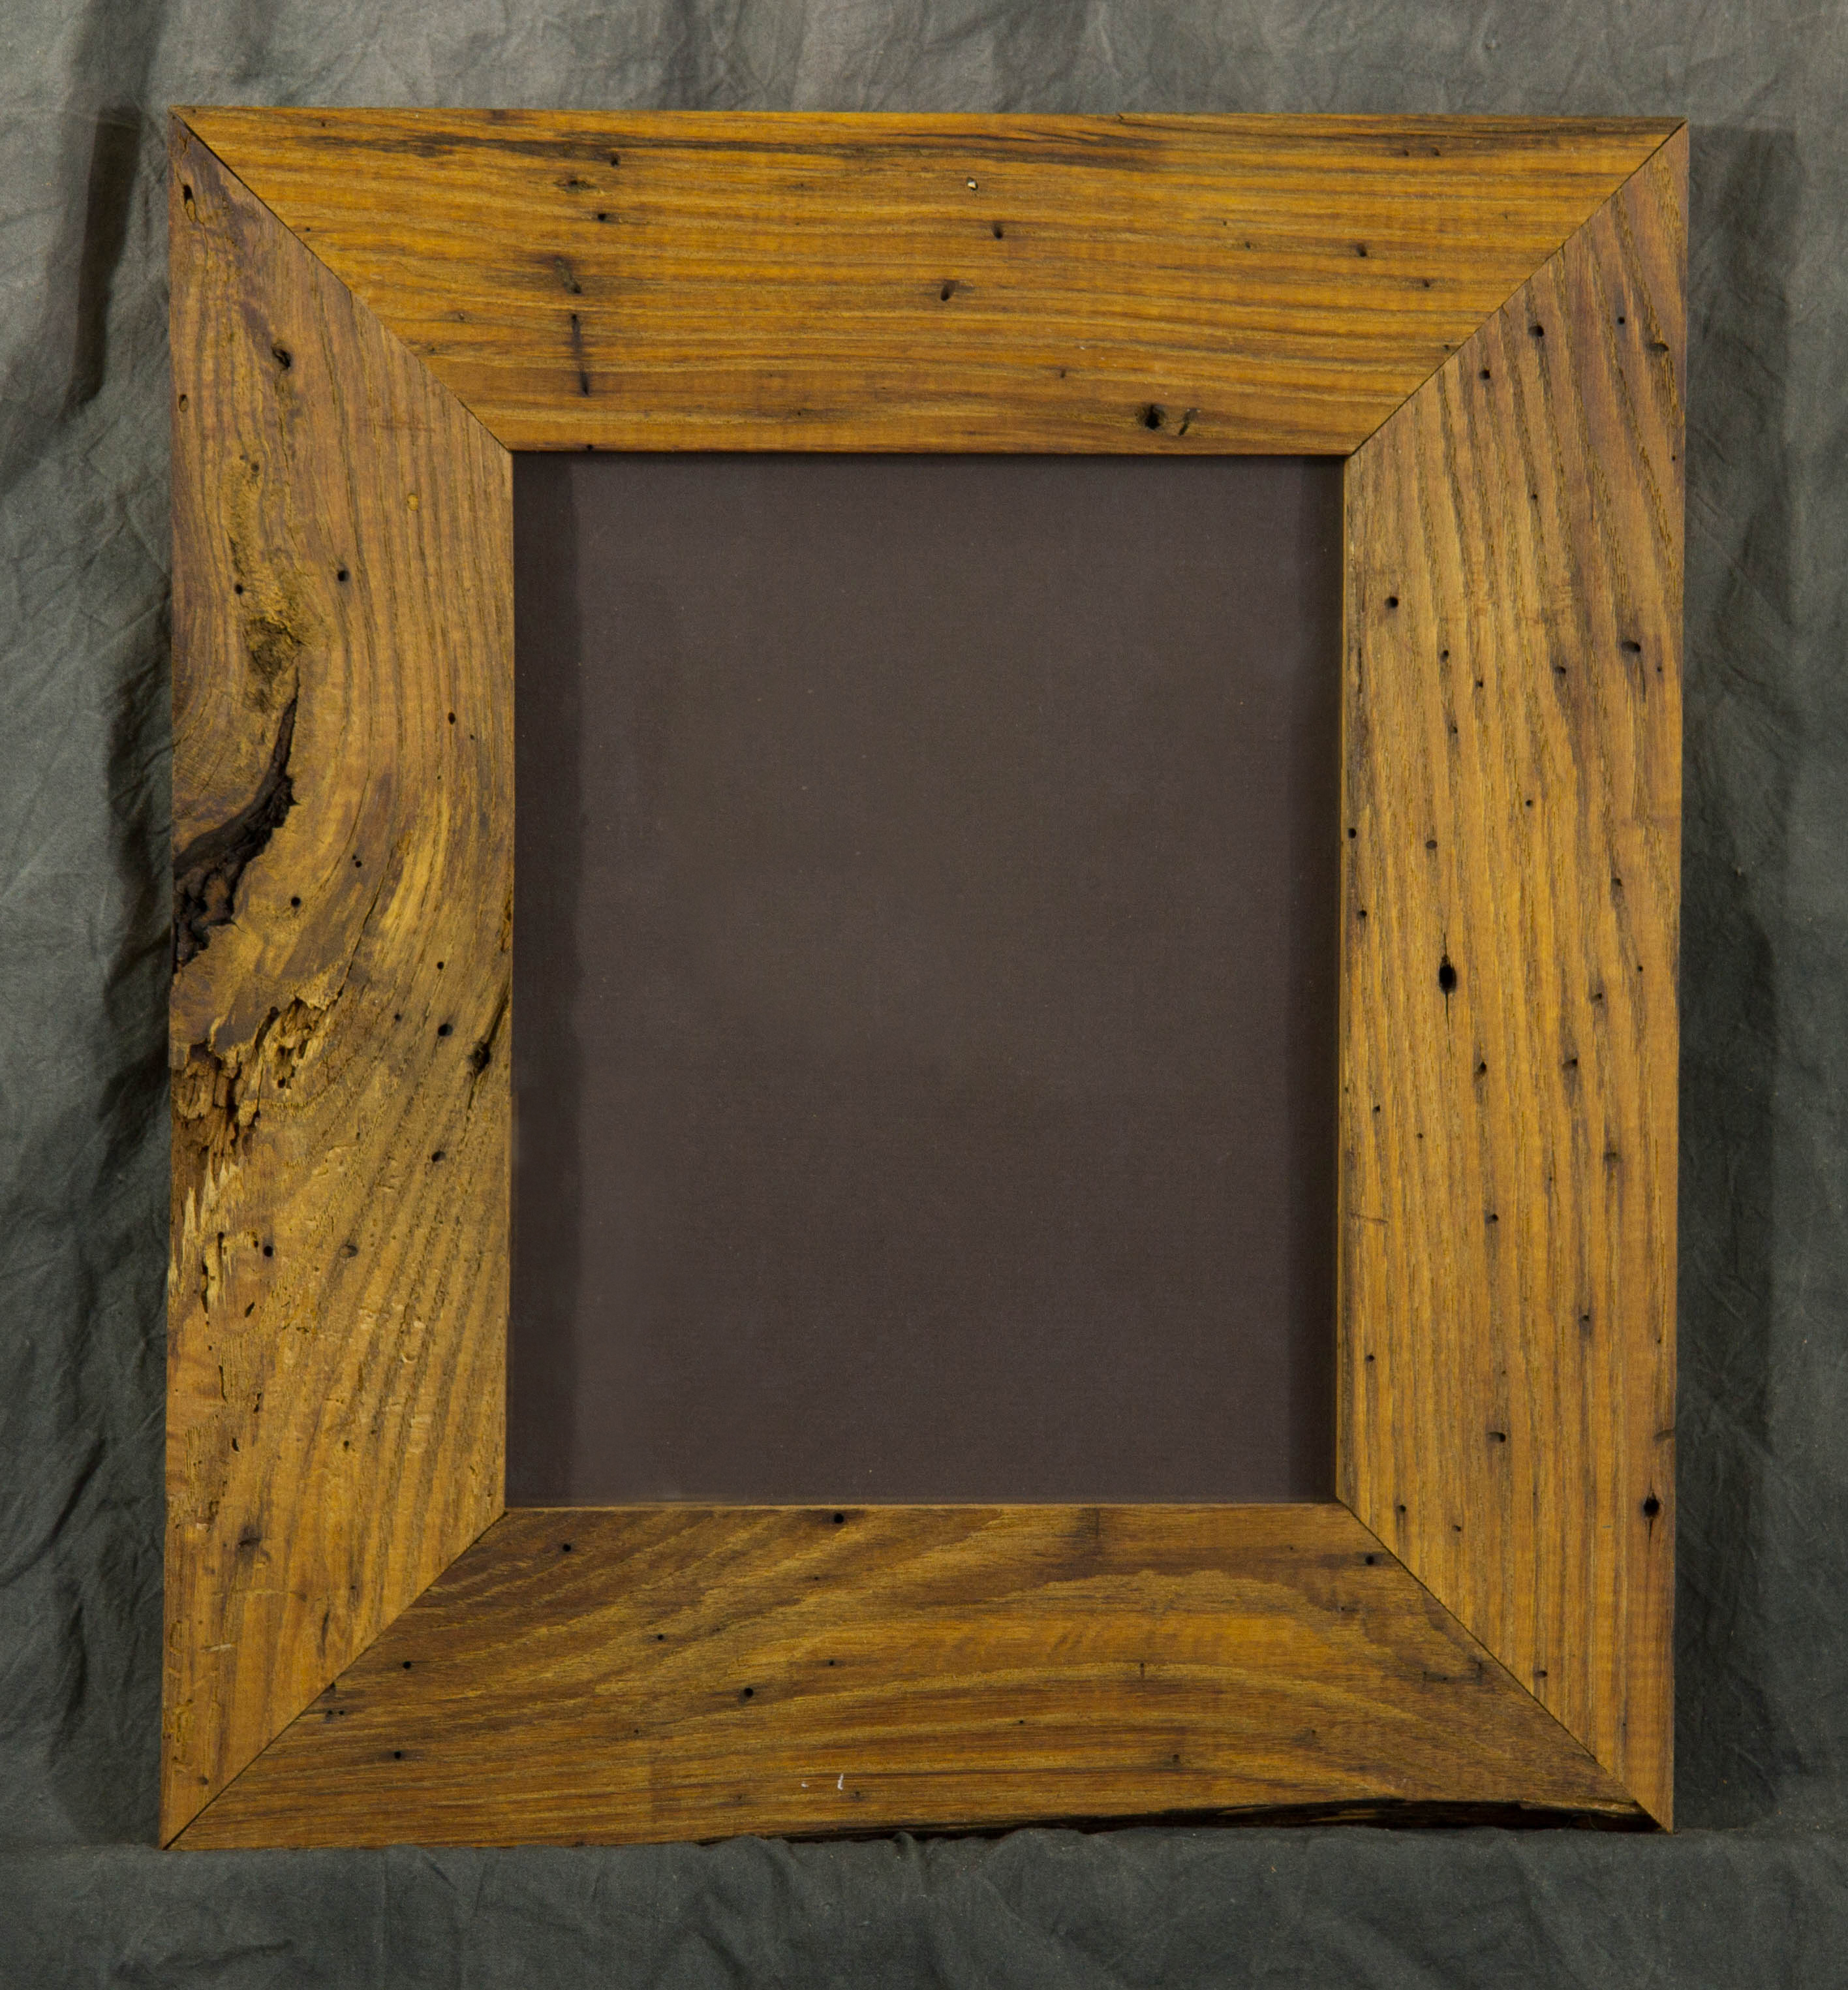 NATIVE EDGE PHOTO FRAMES | Custom handcrafted solid wood photo frames